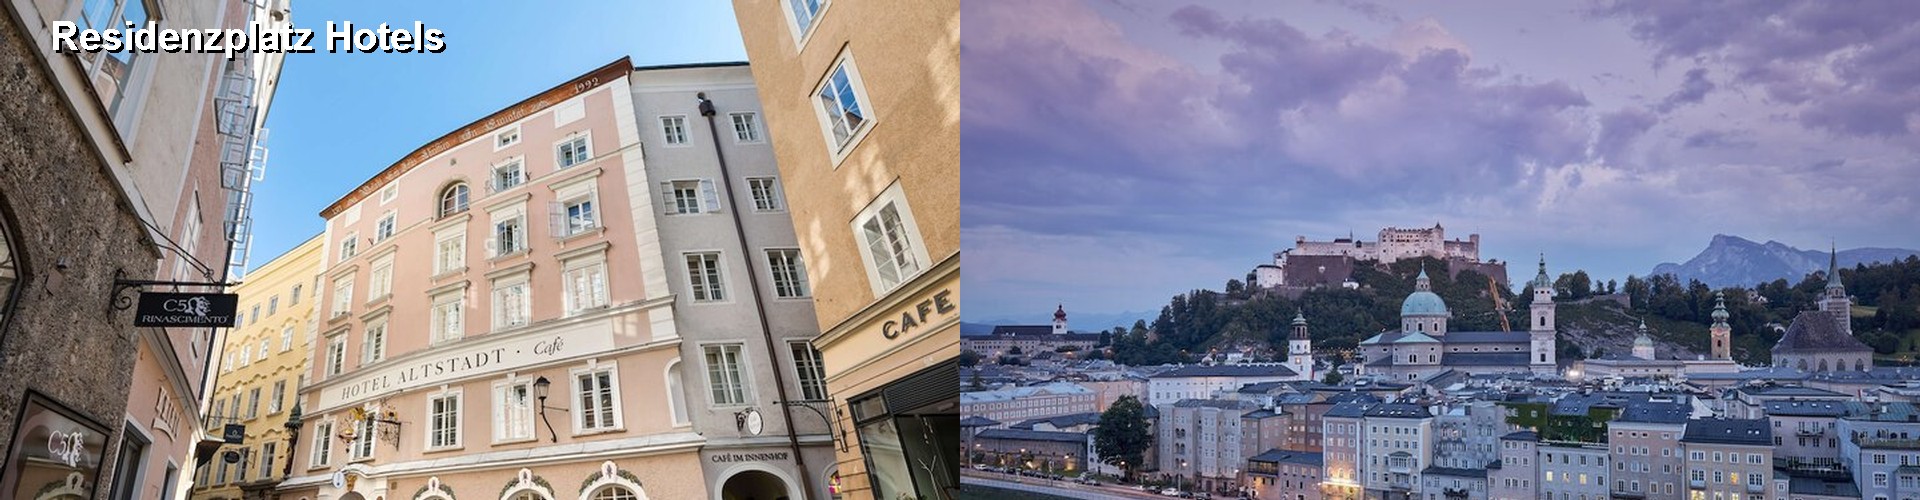 5 Best Hotels near Residenzplatz